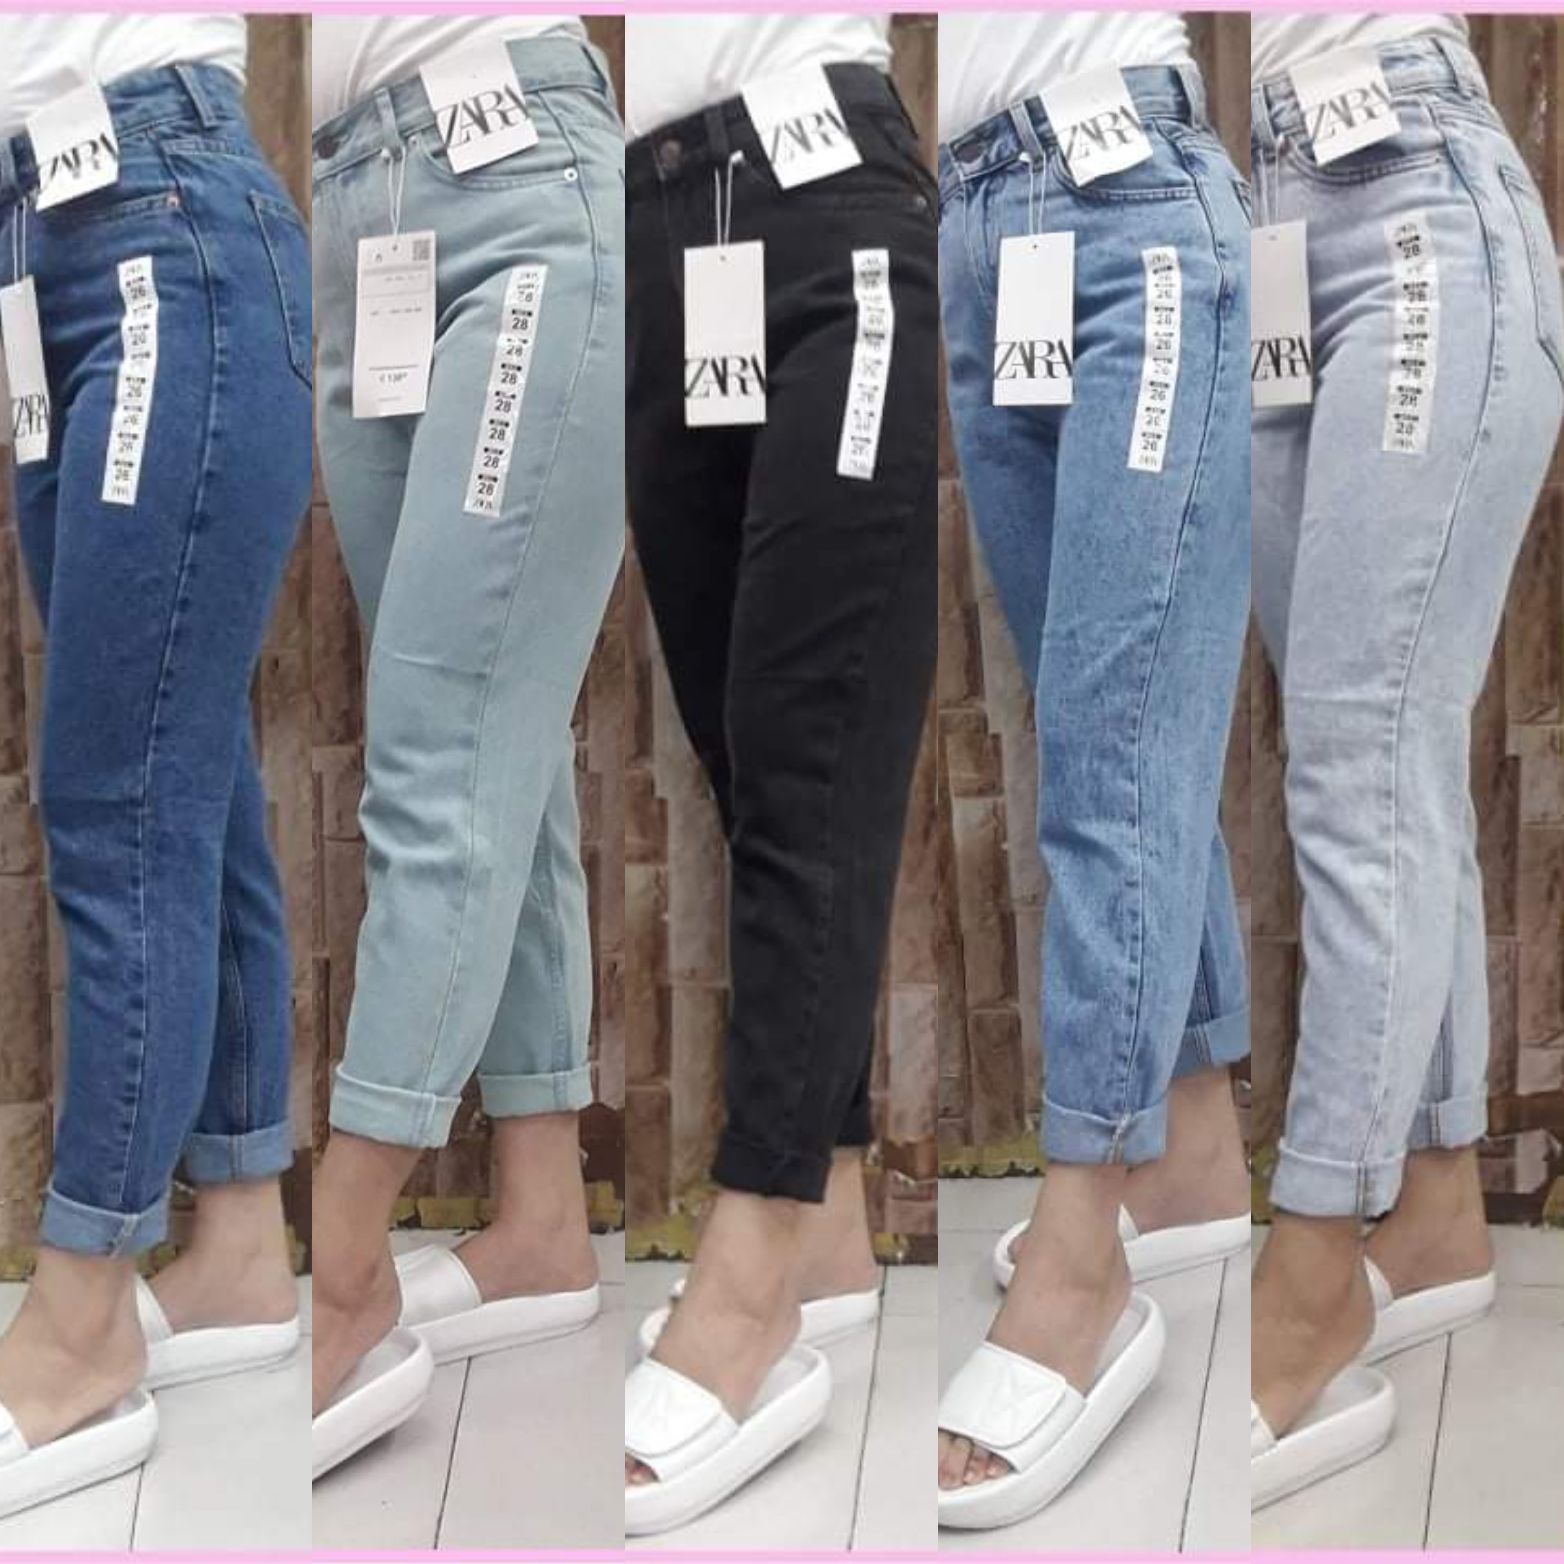 Buy Zara Trouser Pants Women High Waist online